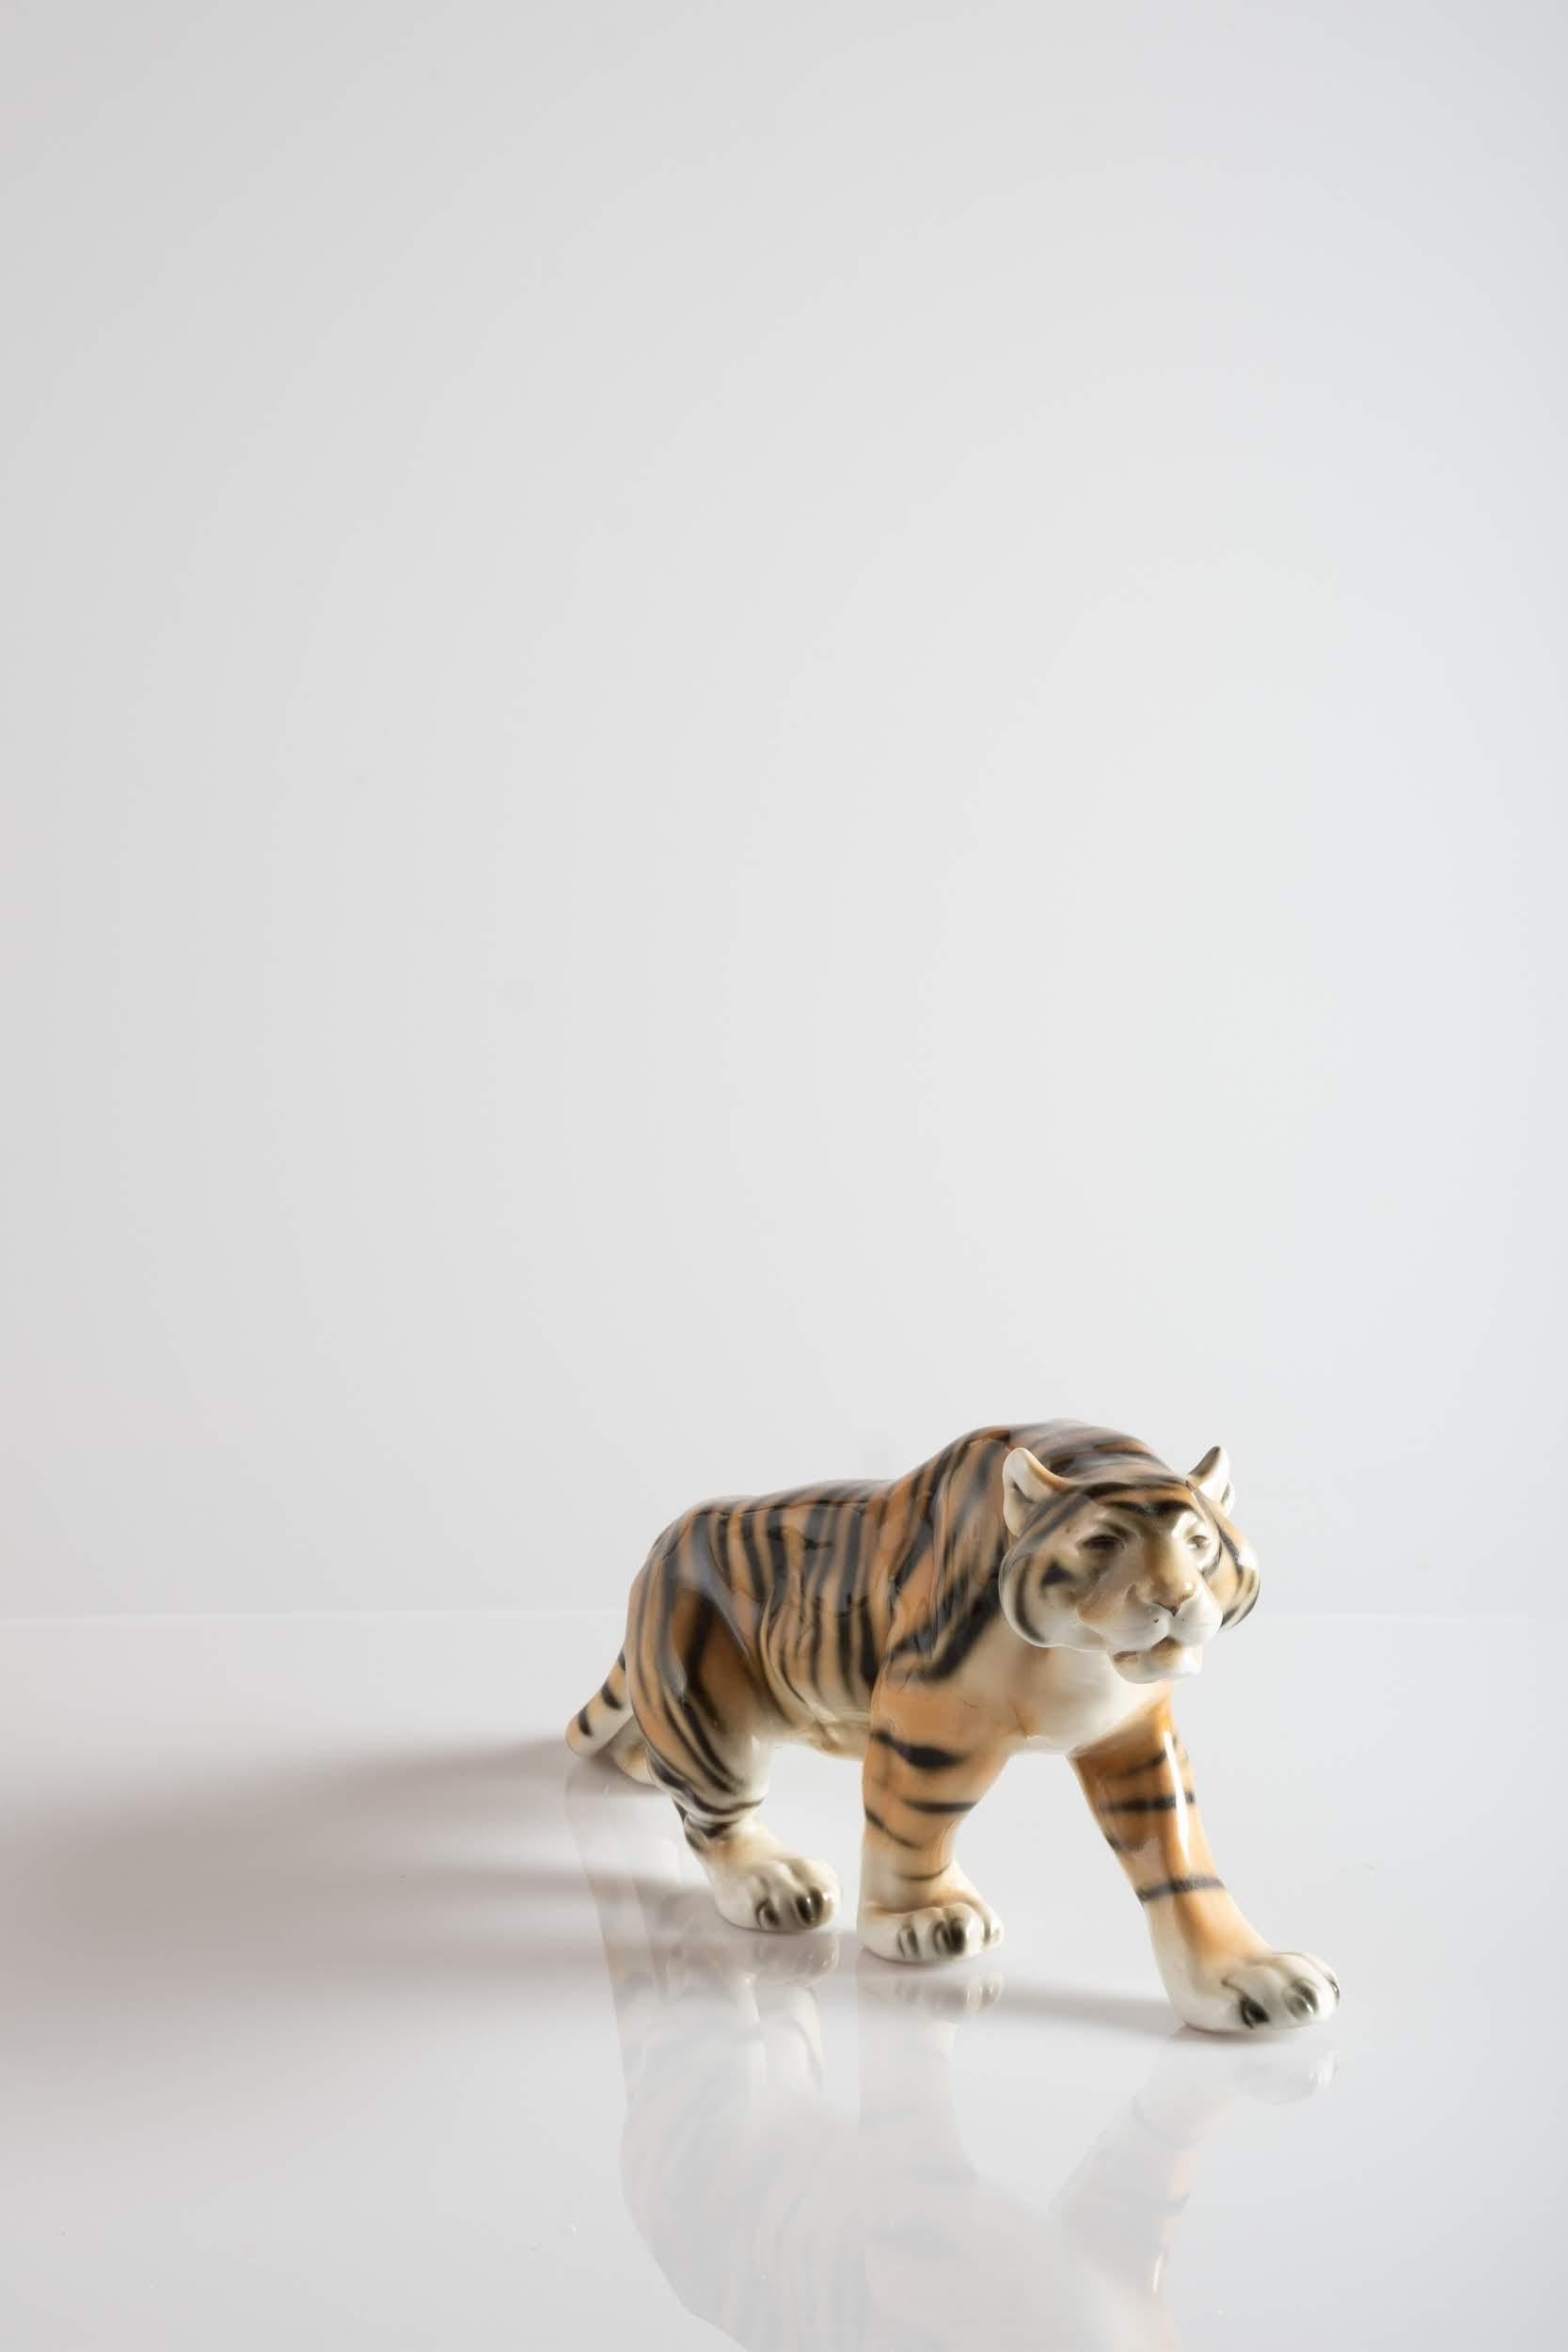 Elegant porcelain sculpture depicting a sumptuous tiger.